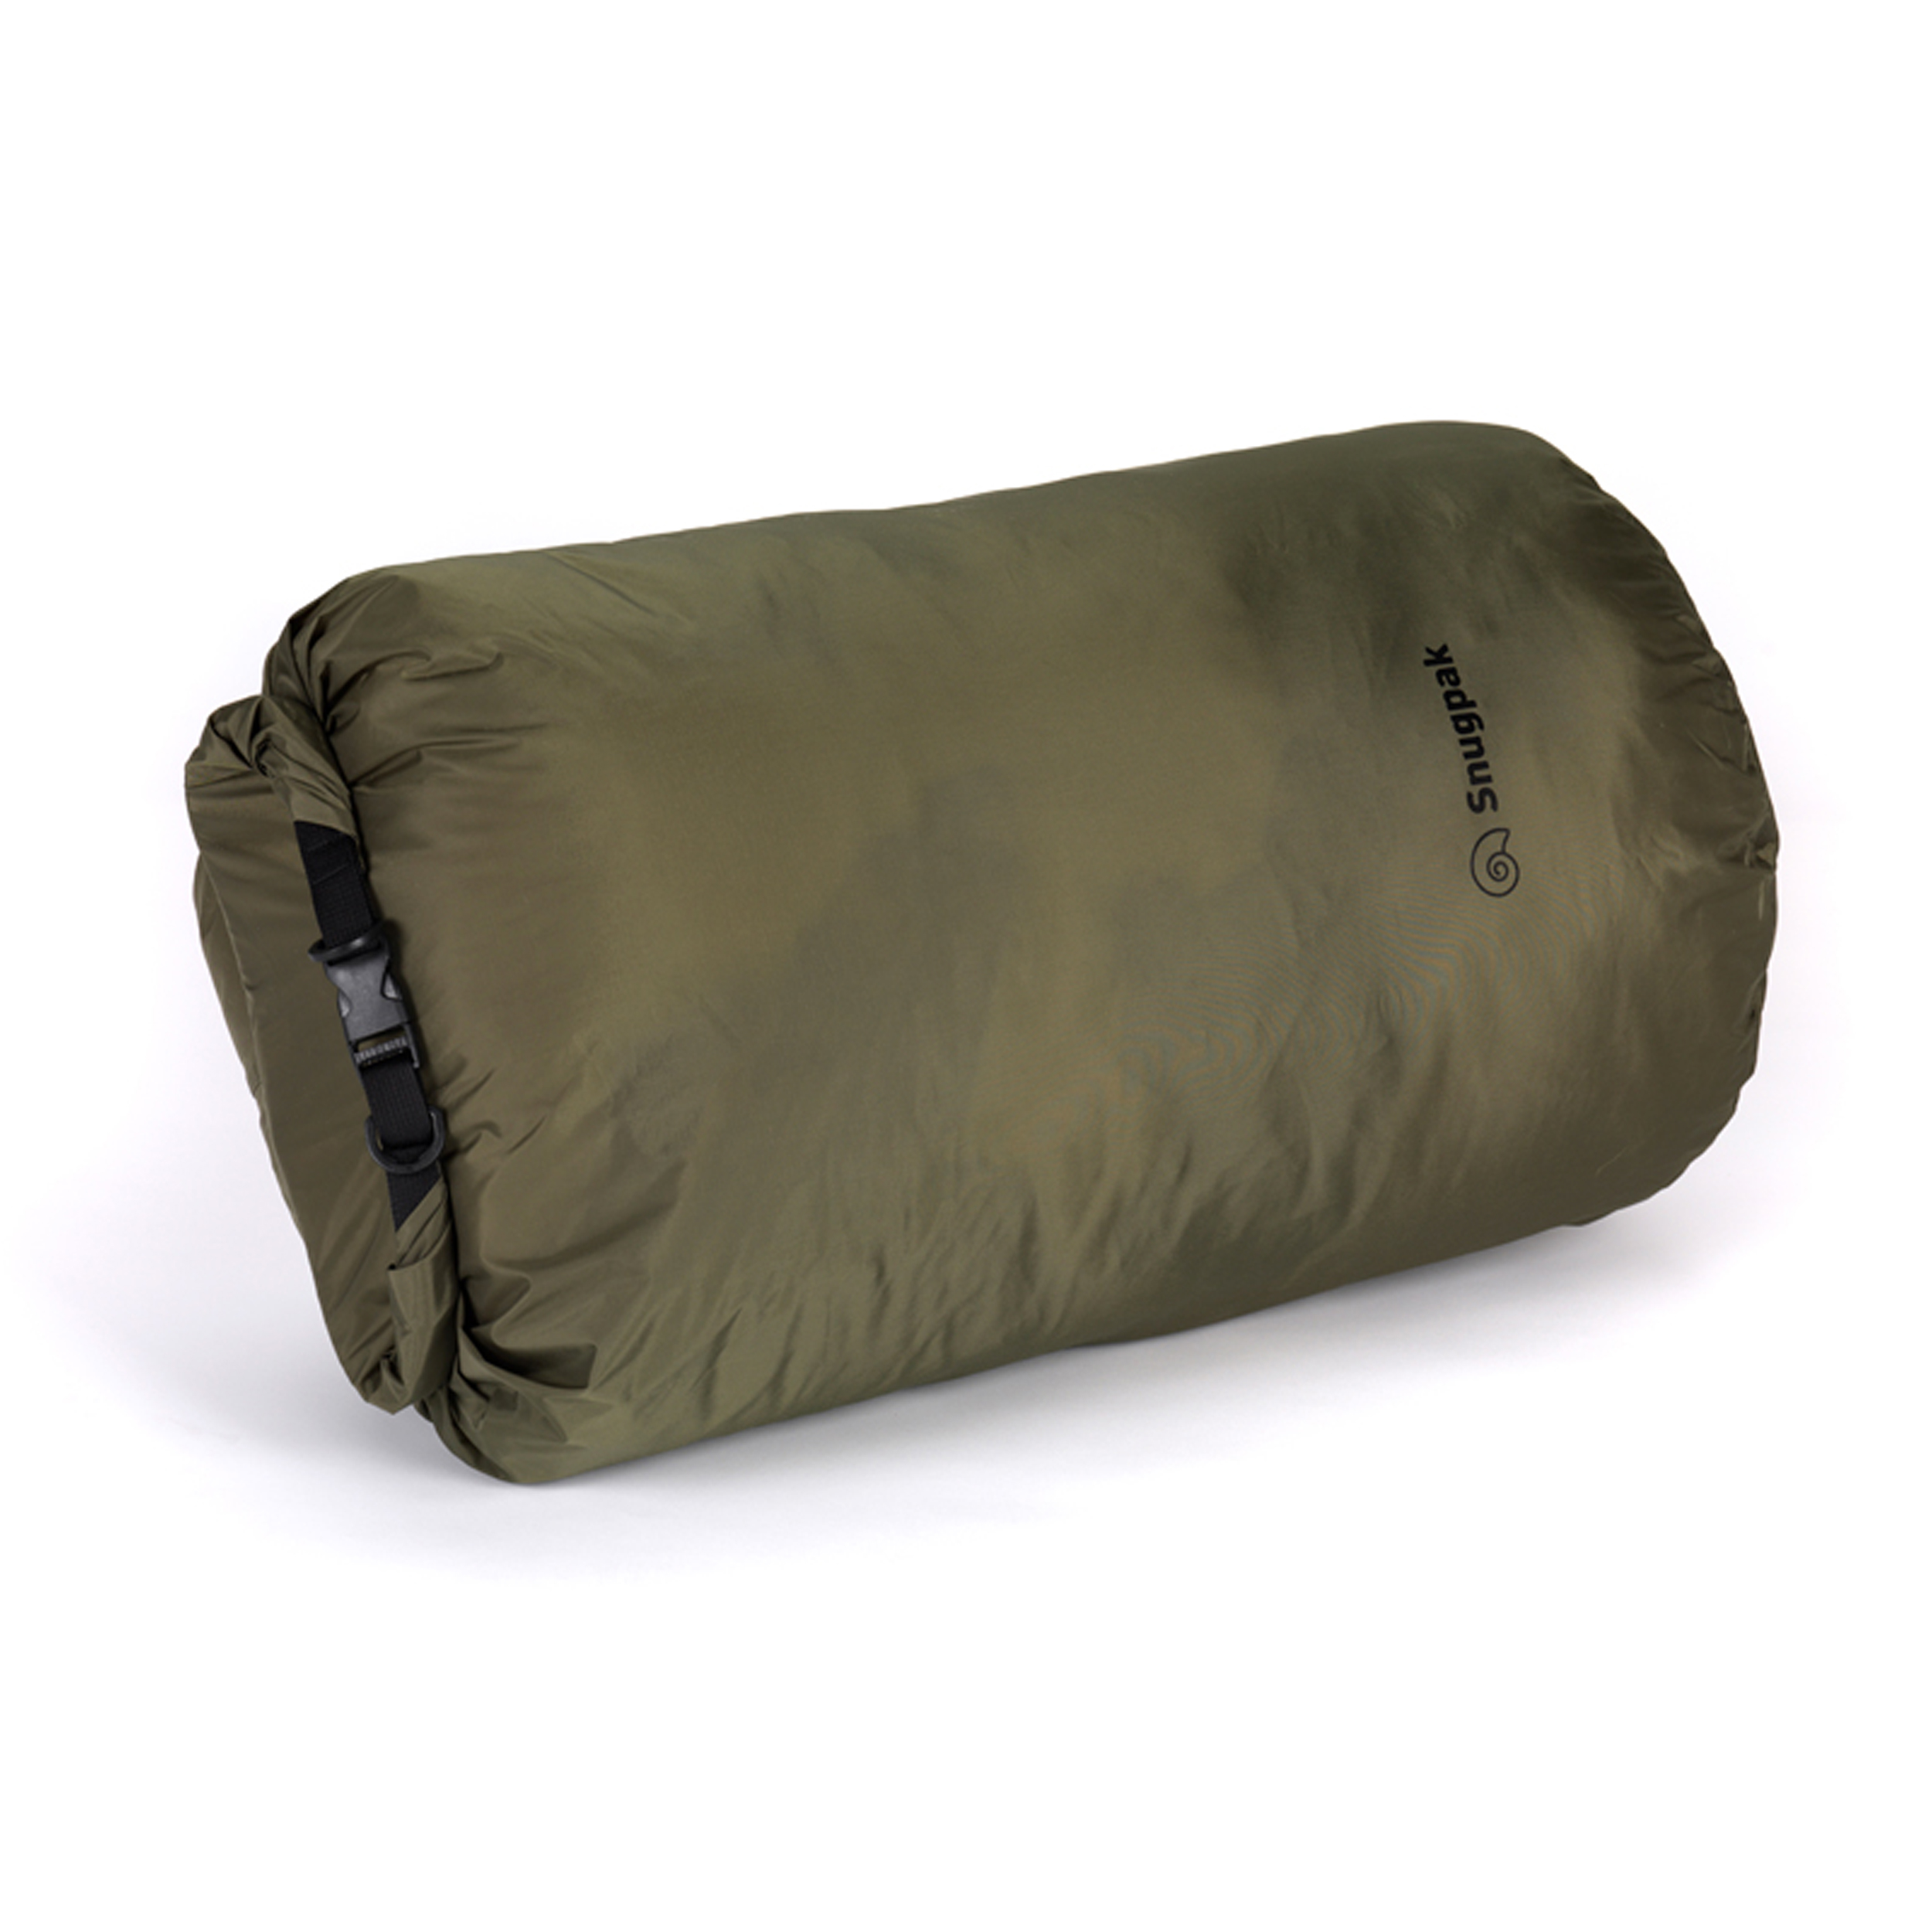 Proforce Equipment Sleeping Bag Compression Sacks - image 2 of 6